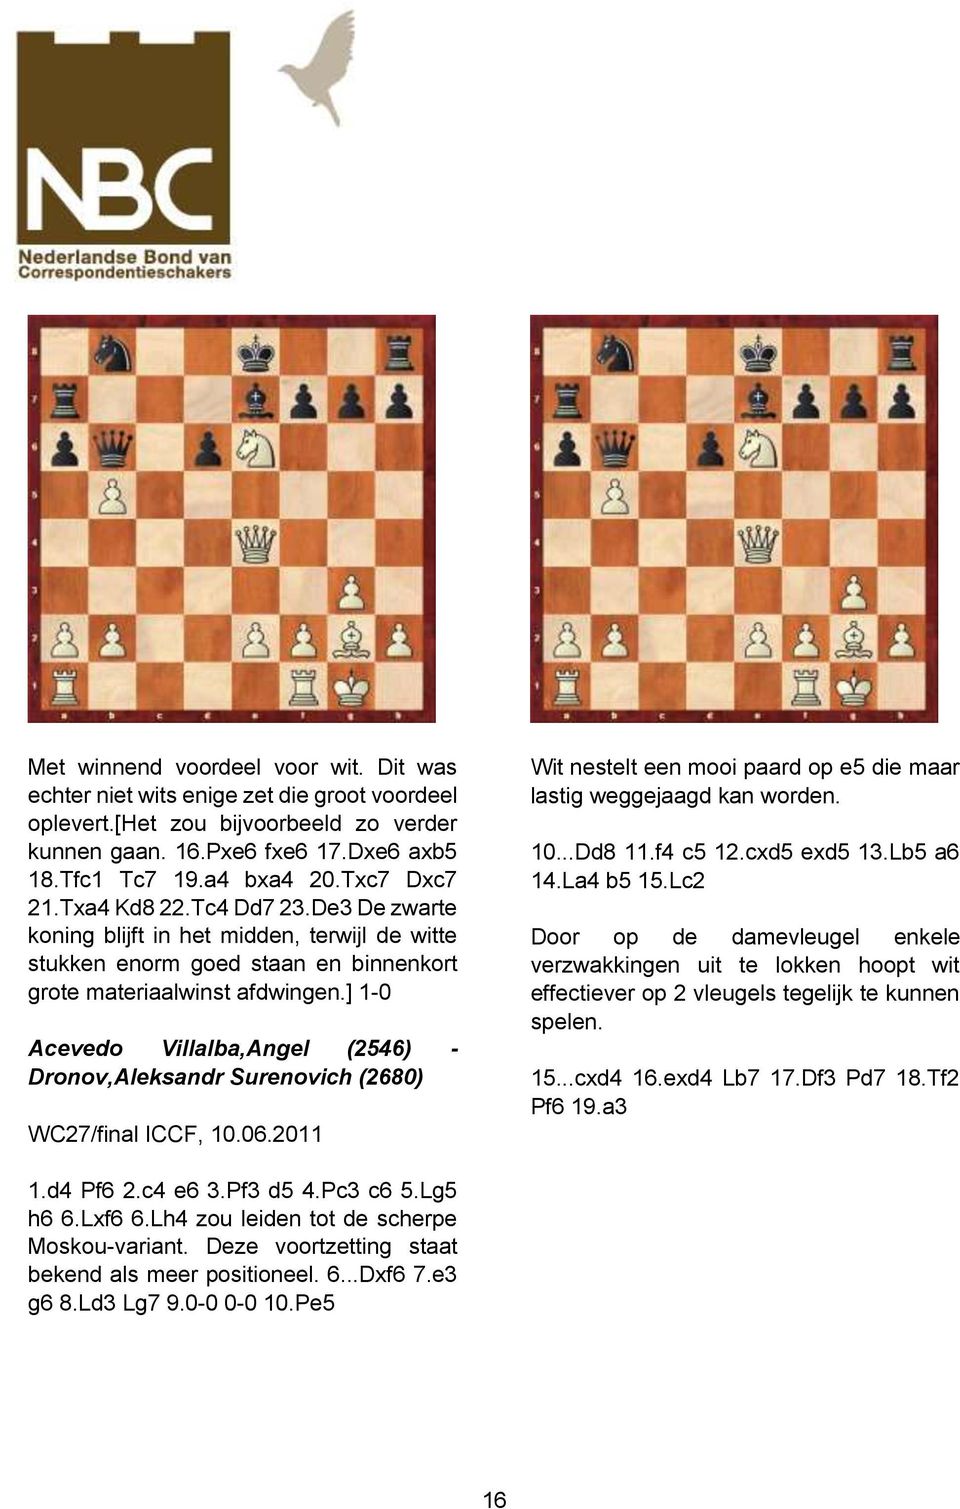 ] 1-0 Acevedo Villalba,Angel (2546) - Dronov,Aleksandr Surenovich (2680) WC27/final ICCF, 10.06.2011 Wit nestelt een mooi paard op e5 die maar lastig weggejaagd kan worden. 10...Dd8 11.f4 c5 12.